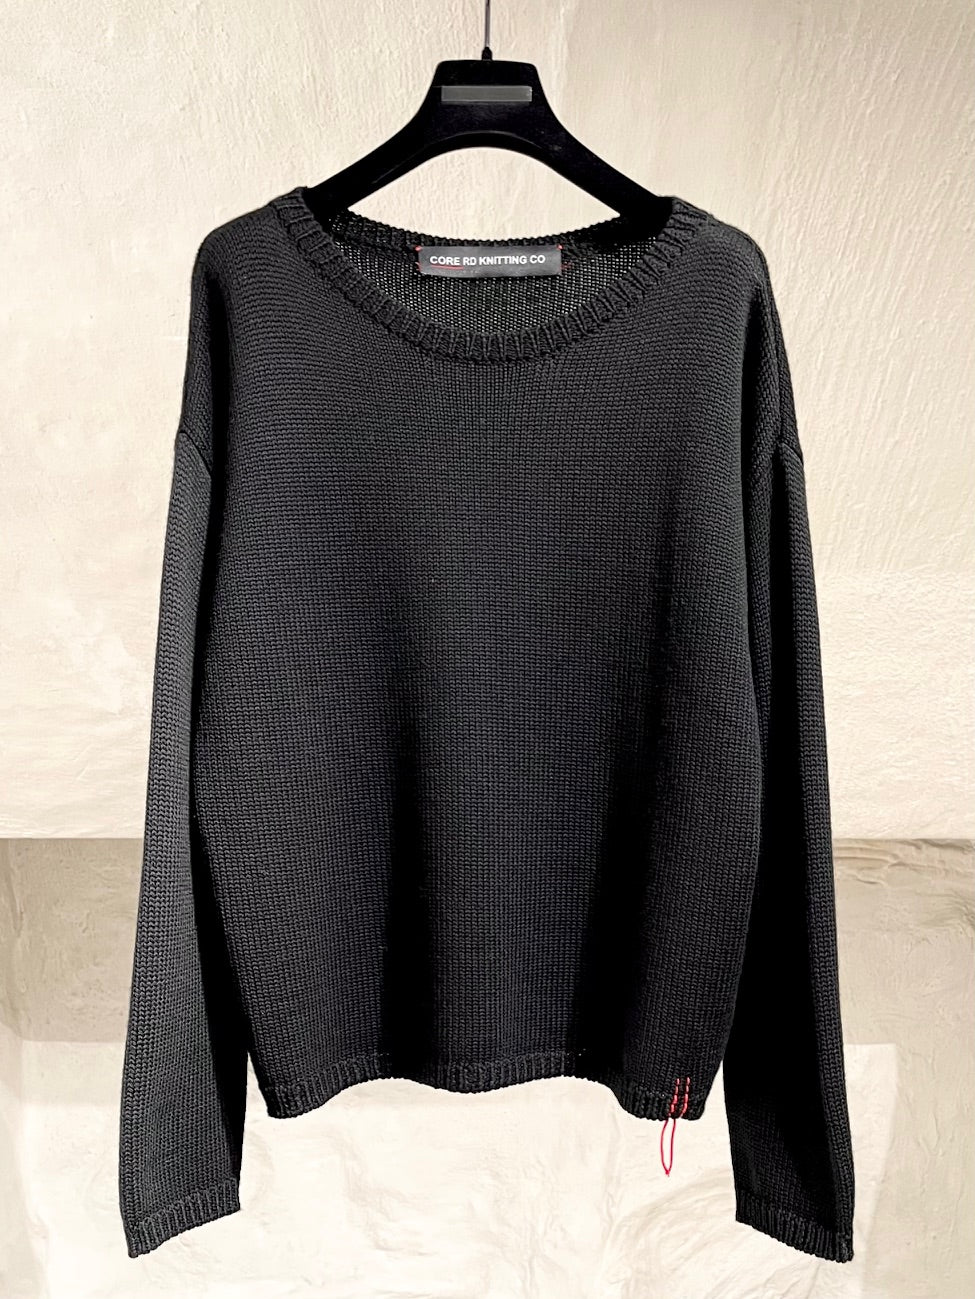 Core RD Knitting Co sweater